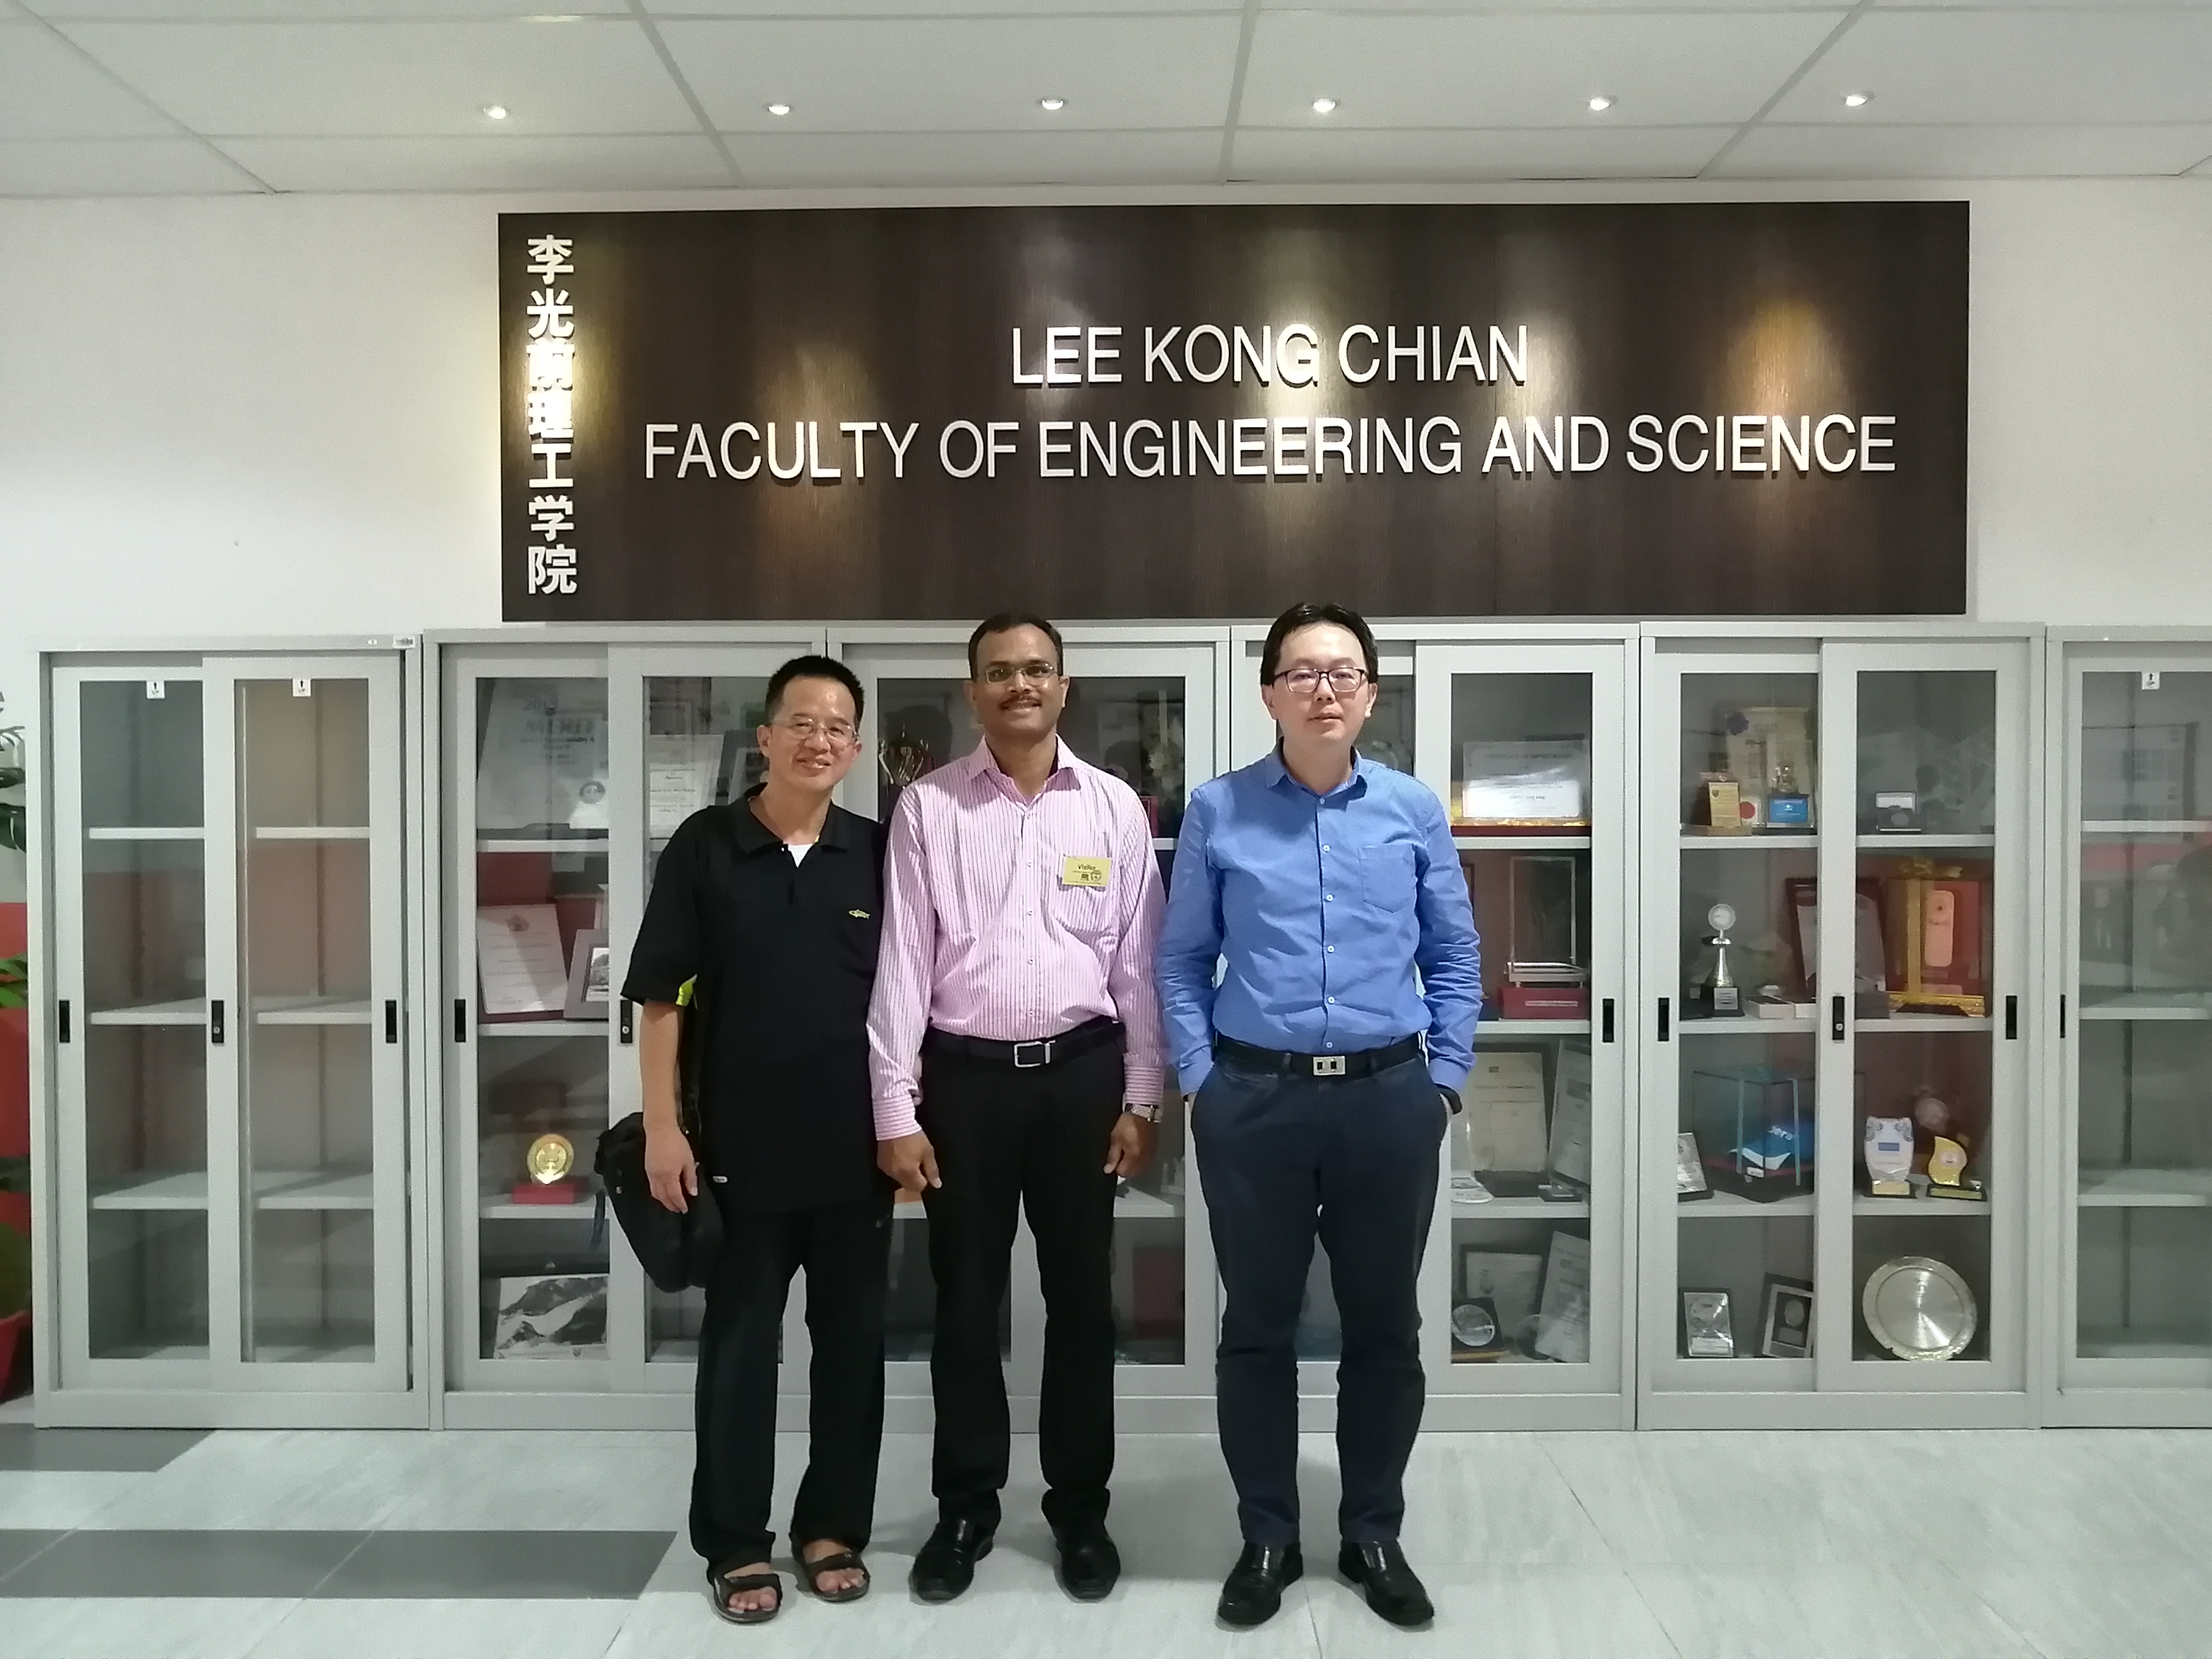 With Dr CHANG yoong Choon at Lee Kong Chian Faculty of Engineering and Science, UTAR, Malaysia (November 2019).